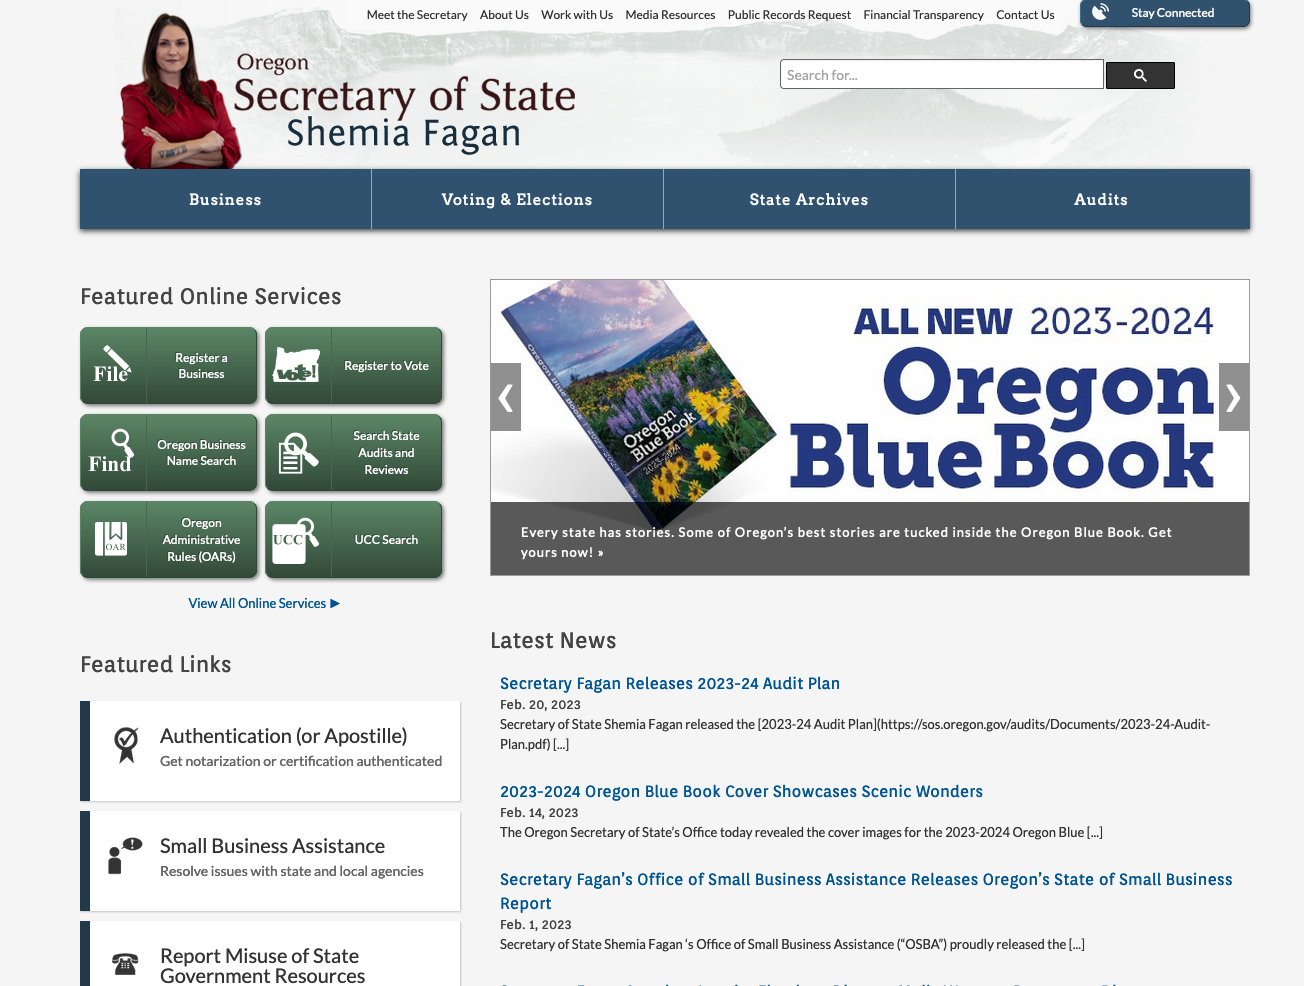 Visit the Oregon Secretary of State's Website